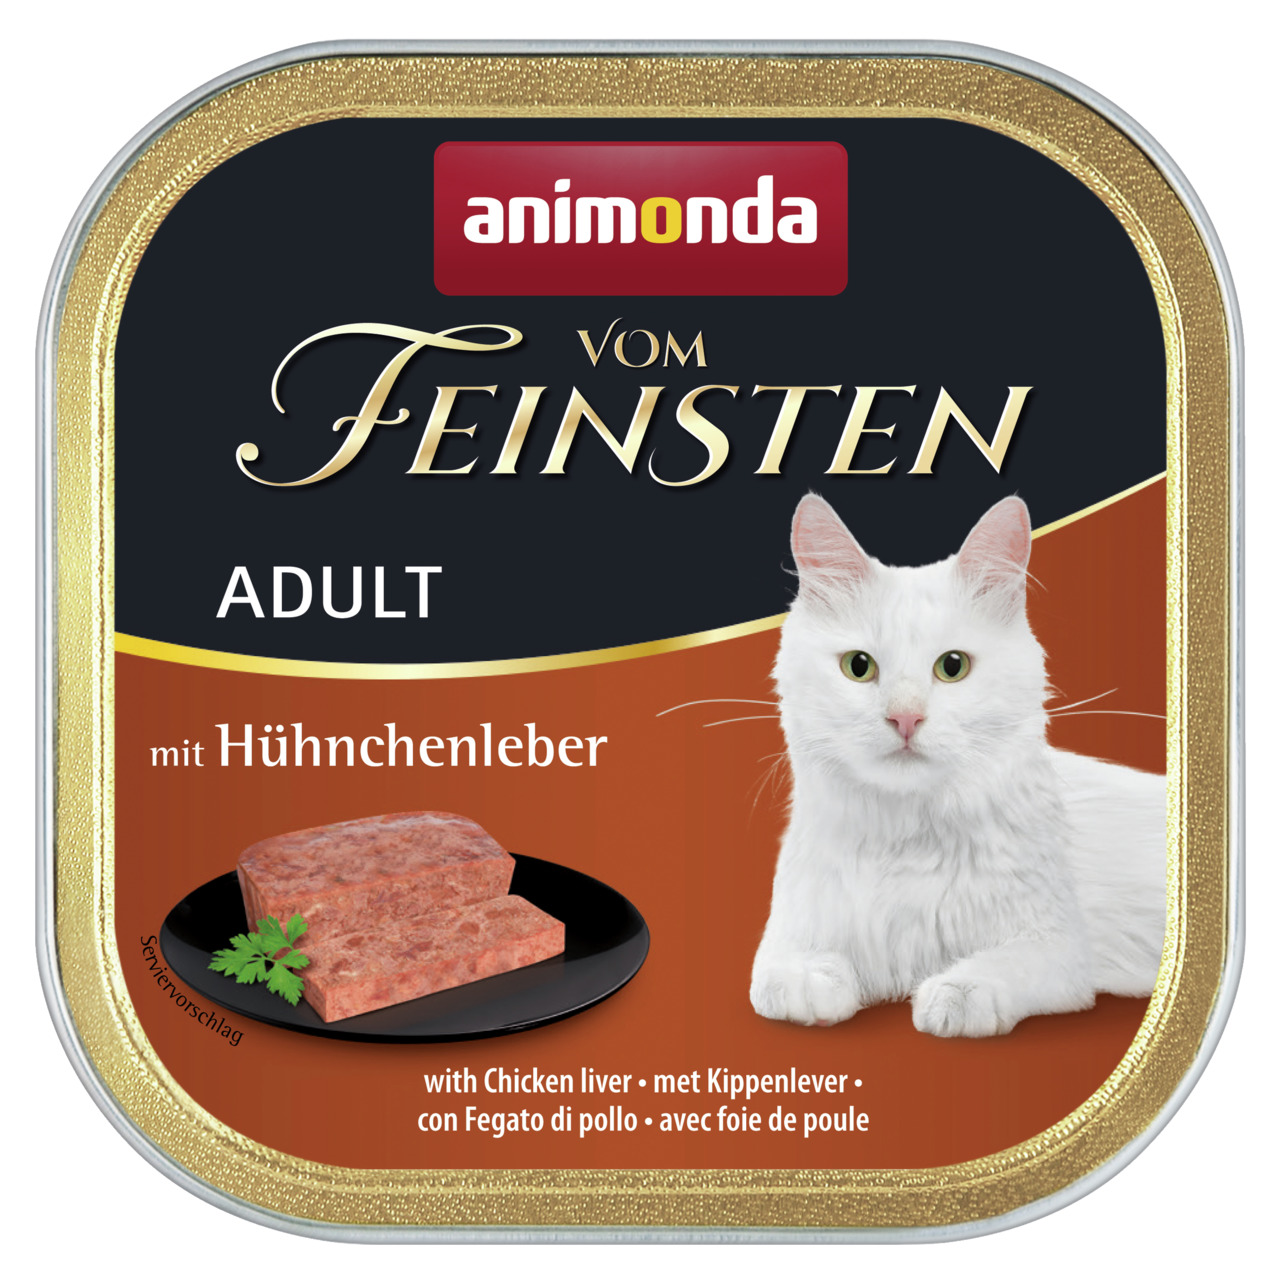 Animonda vom Feinsten Adult Hühnchenleber Katzen Nassfutter 100 g